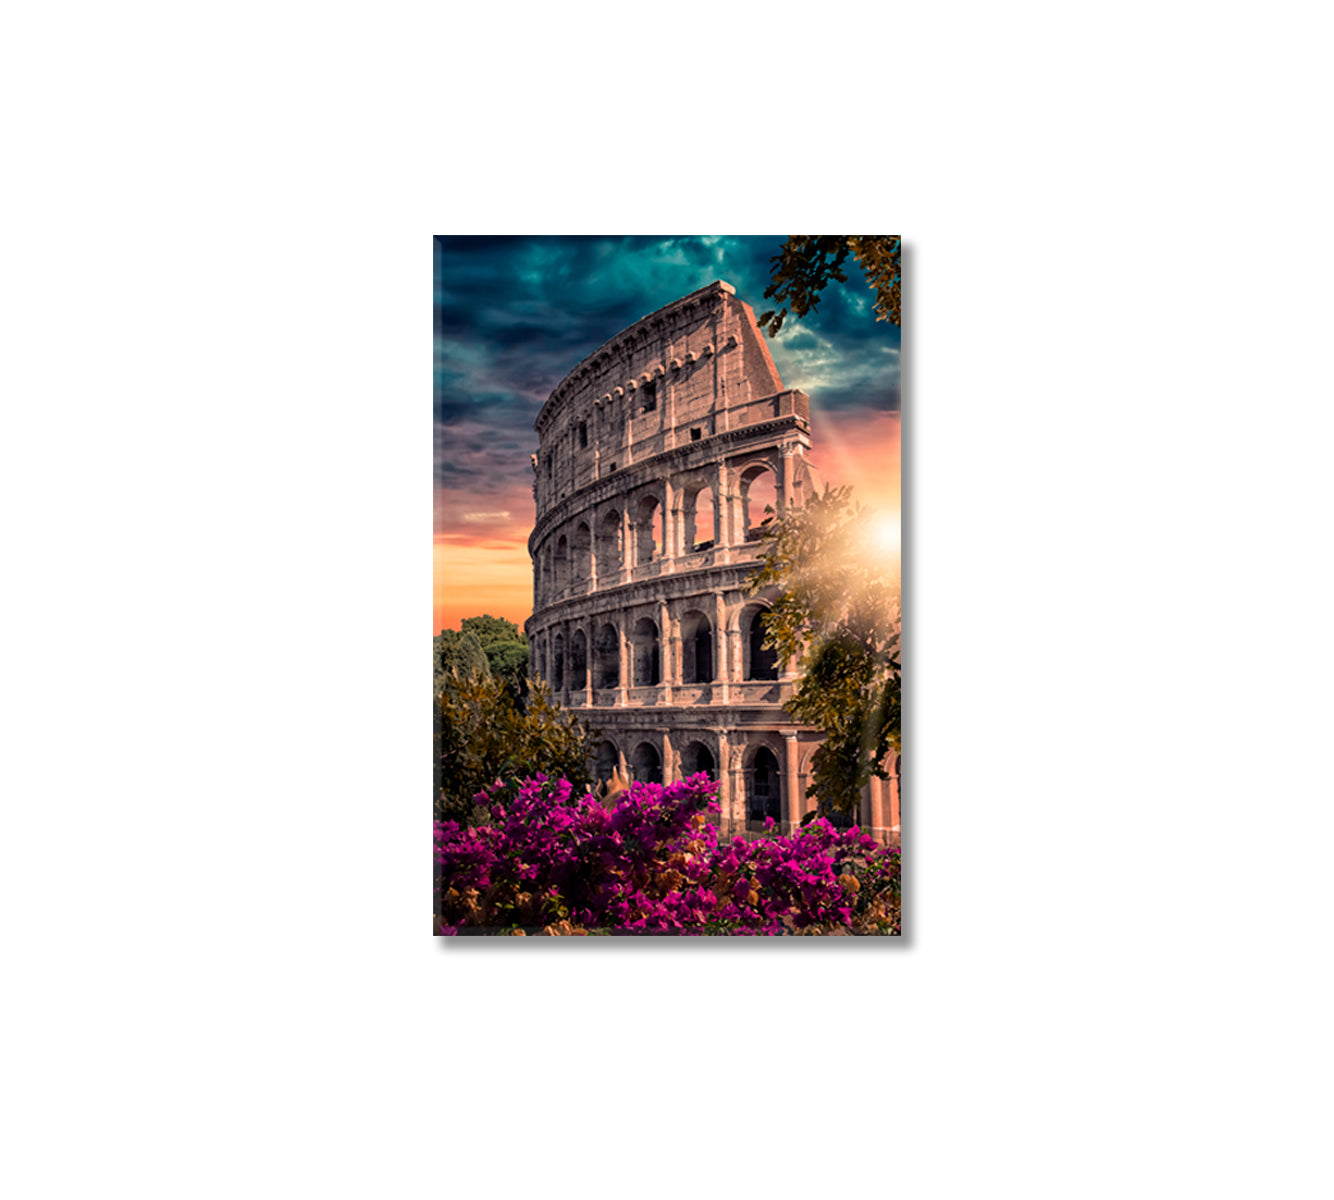 Rome Colosseum Italy Giclee Art Decor-Canvas Print-CetArt-1 panel-16x24 inches-CetArt